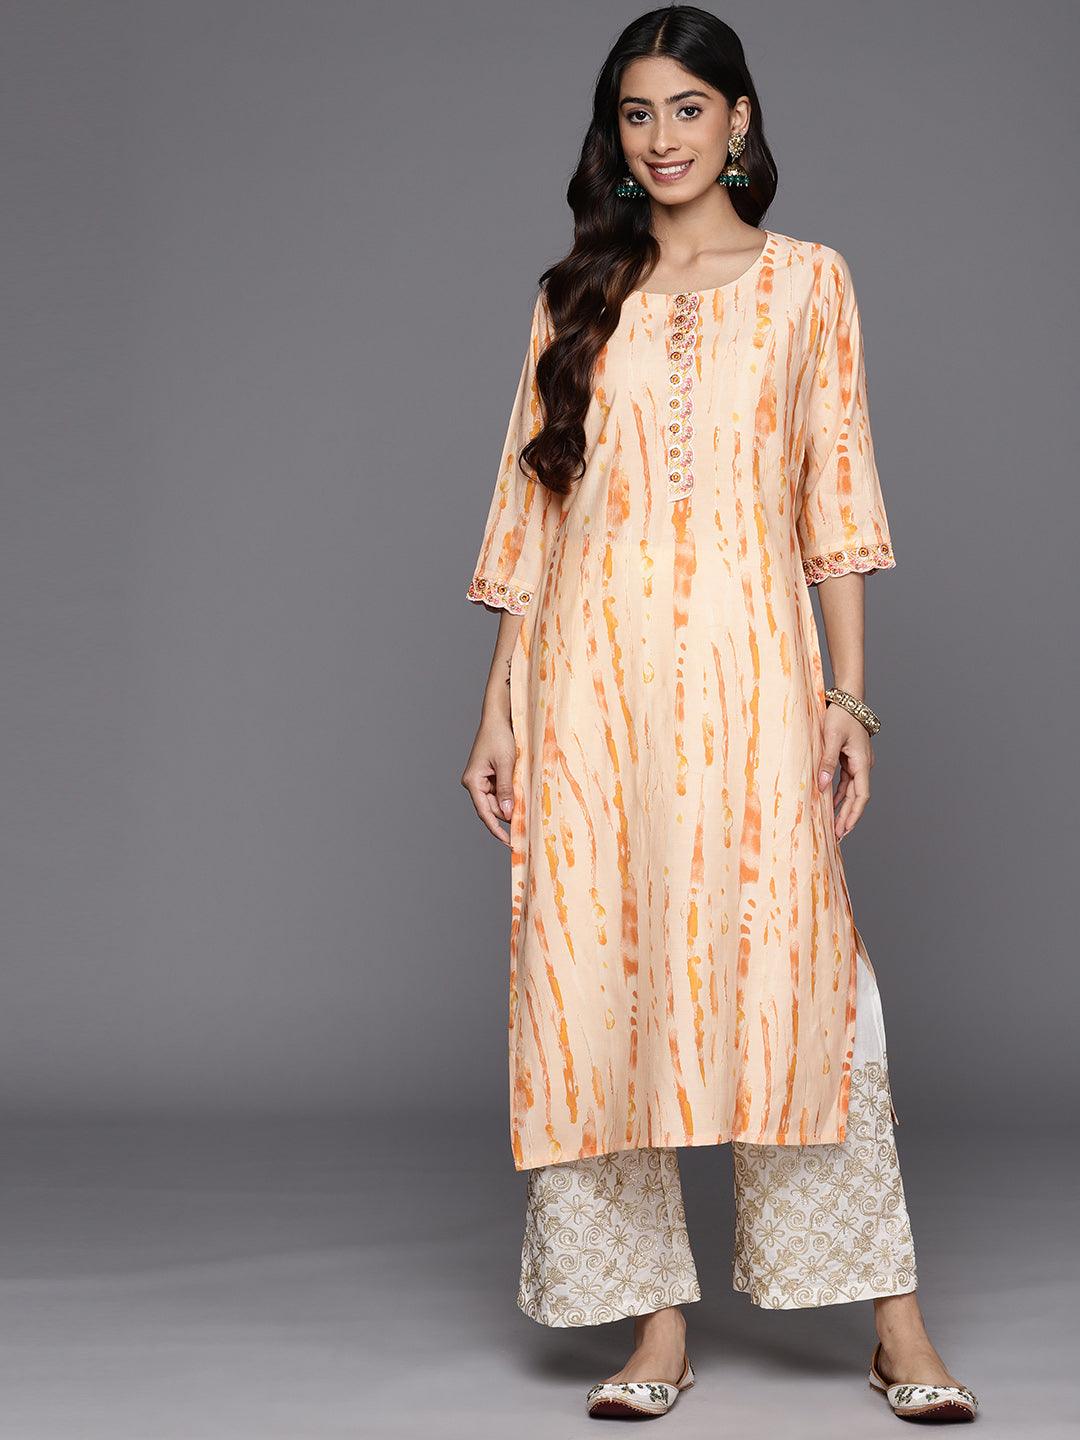 Buy Orange Printed Silk Straight Kurta Online at Rs.879